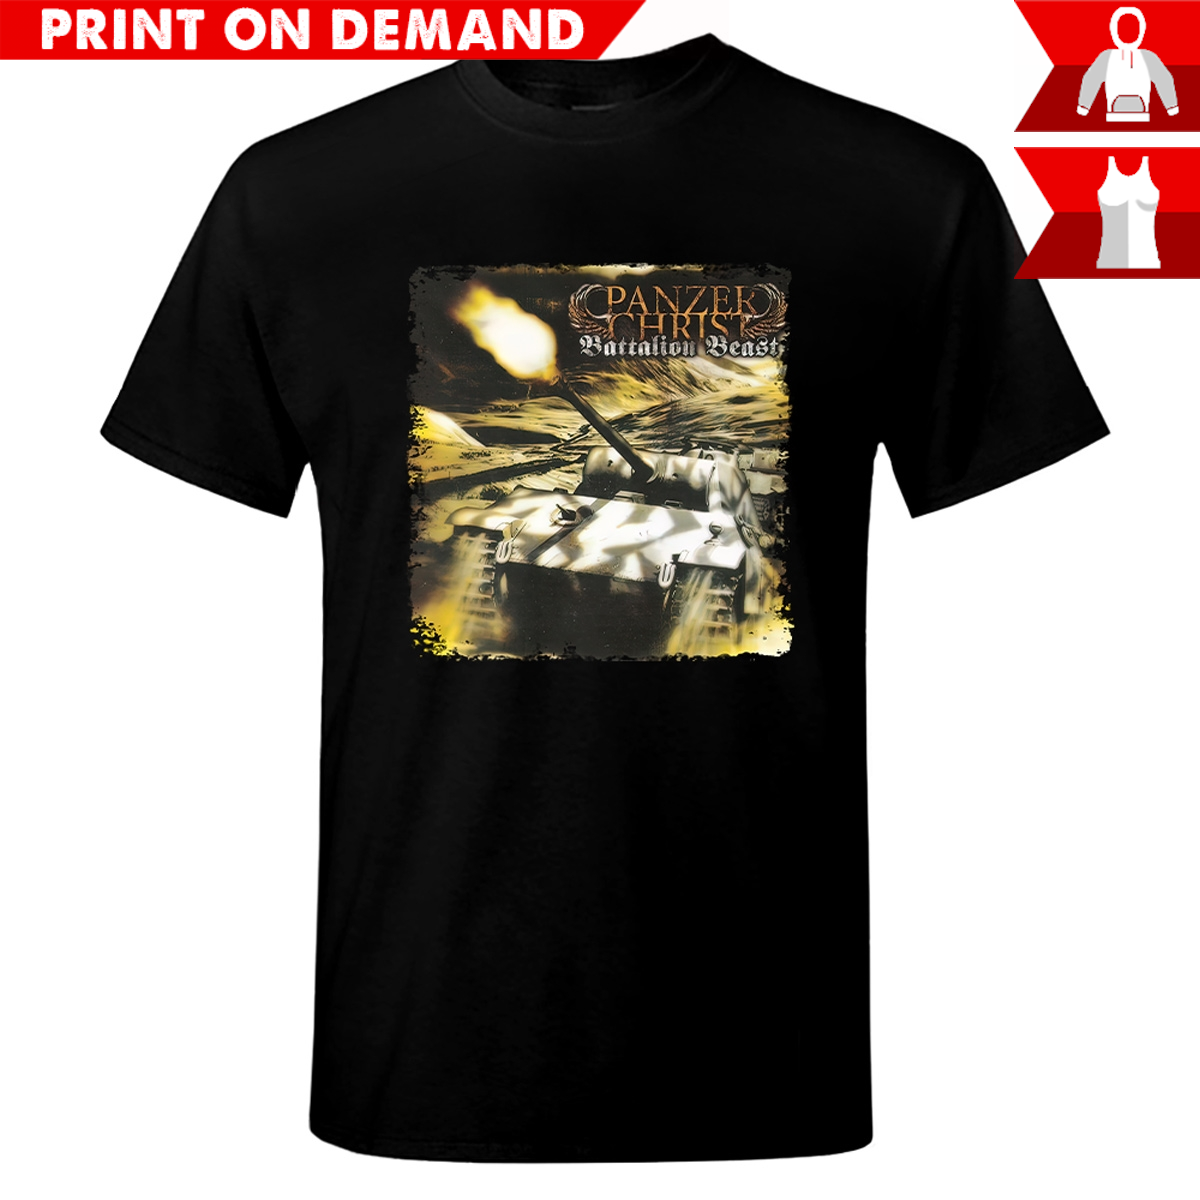 Panzerchrist | Battallion Beast - Print on demand - Death Metal ...